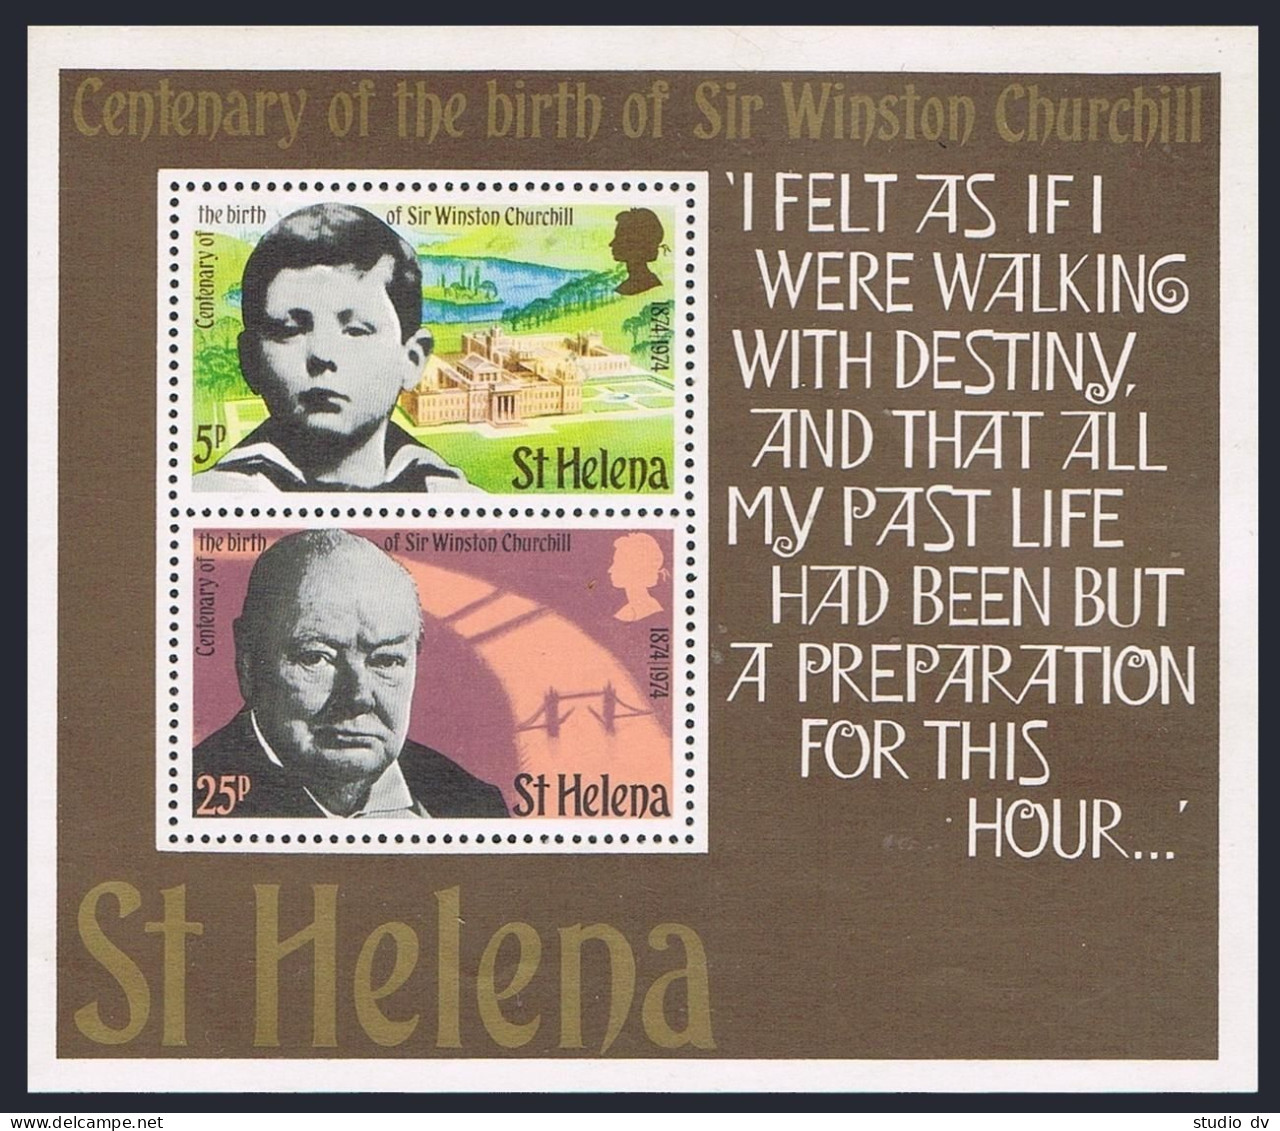 St Helena 285-286,286a Sheet,MNH. Sir Winston Churchill-100,1974.Blenheim Palace - Saint Helena Island